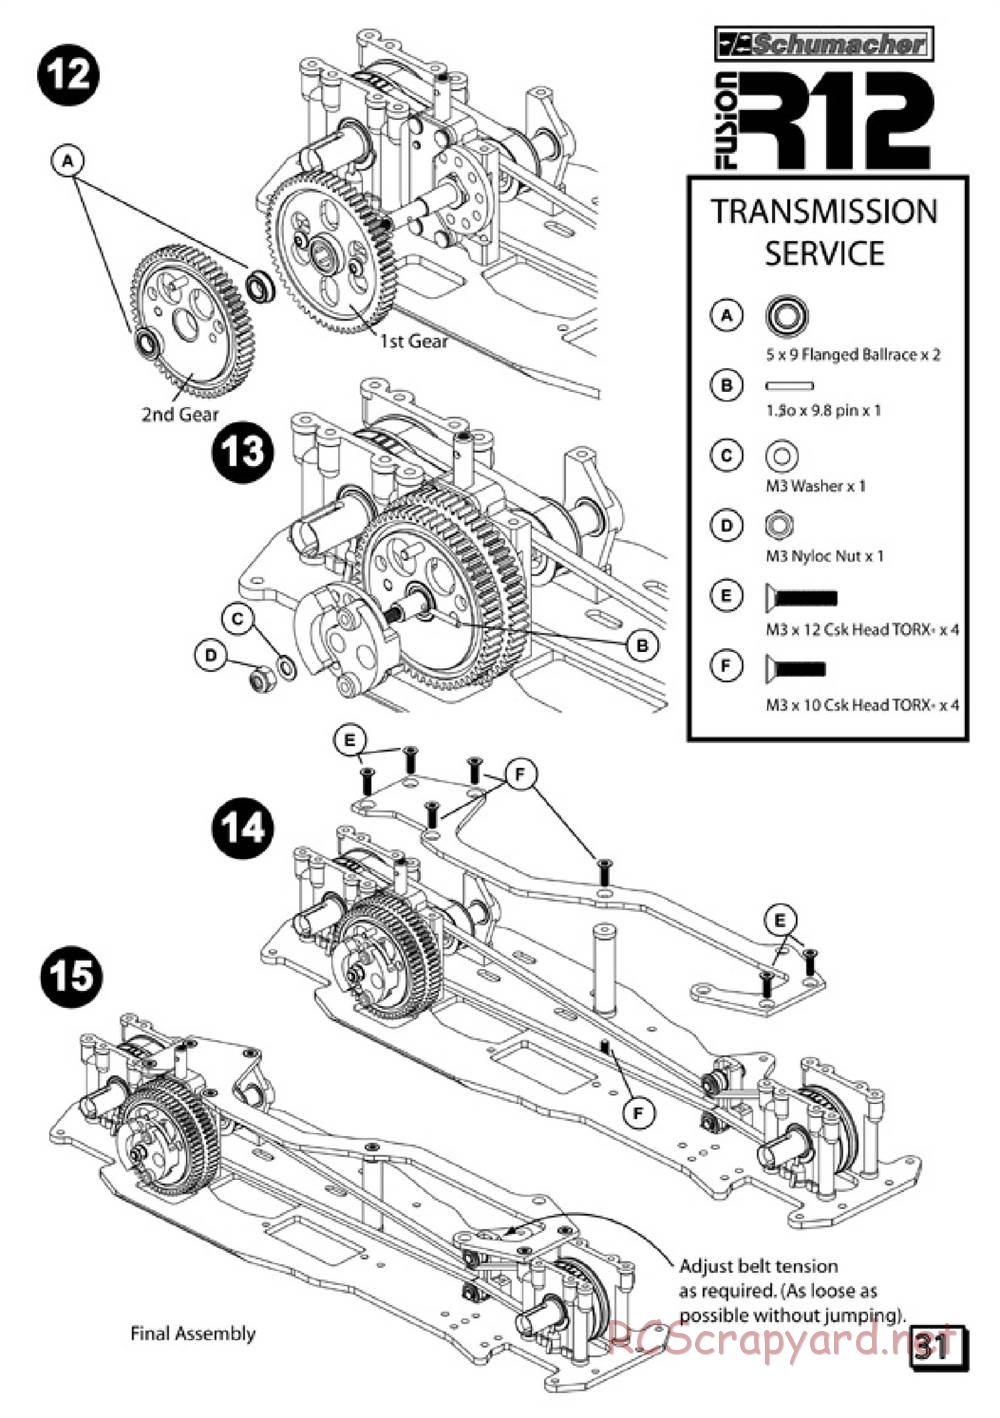 Schumacher - Fusion R12 - Manual - Page 32